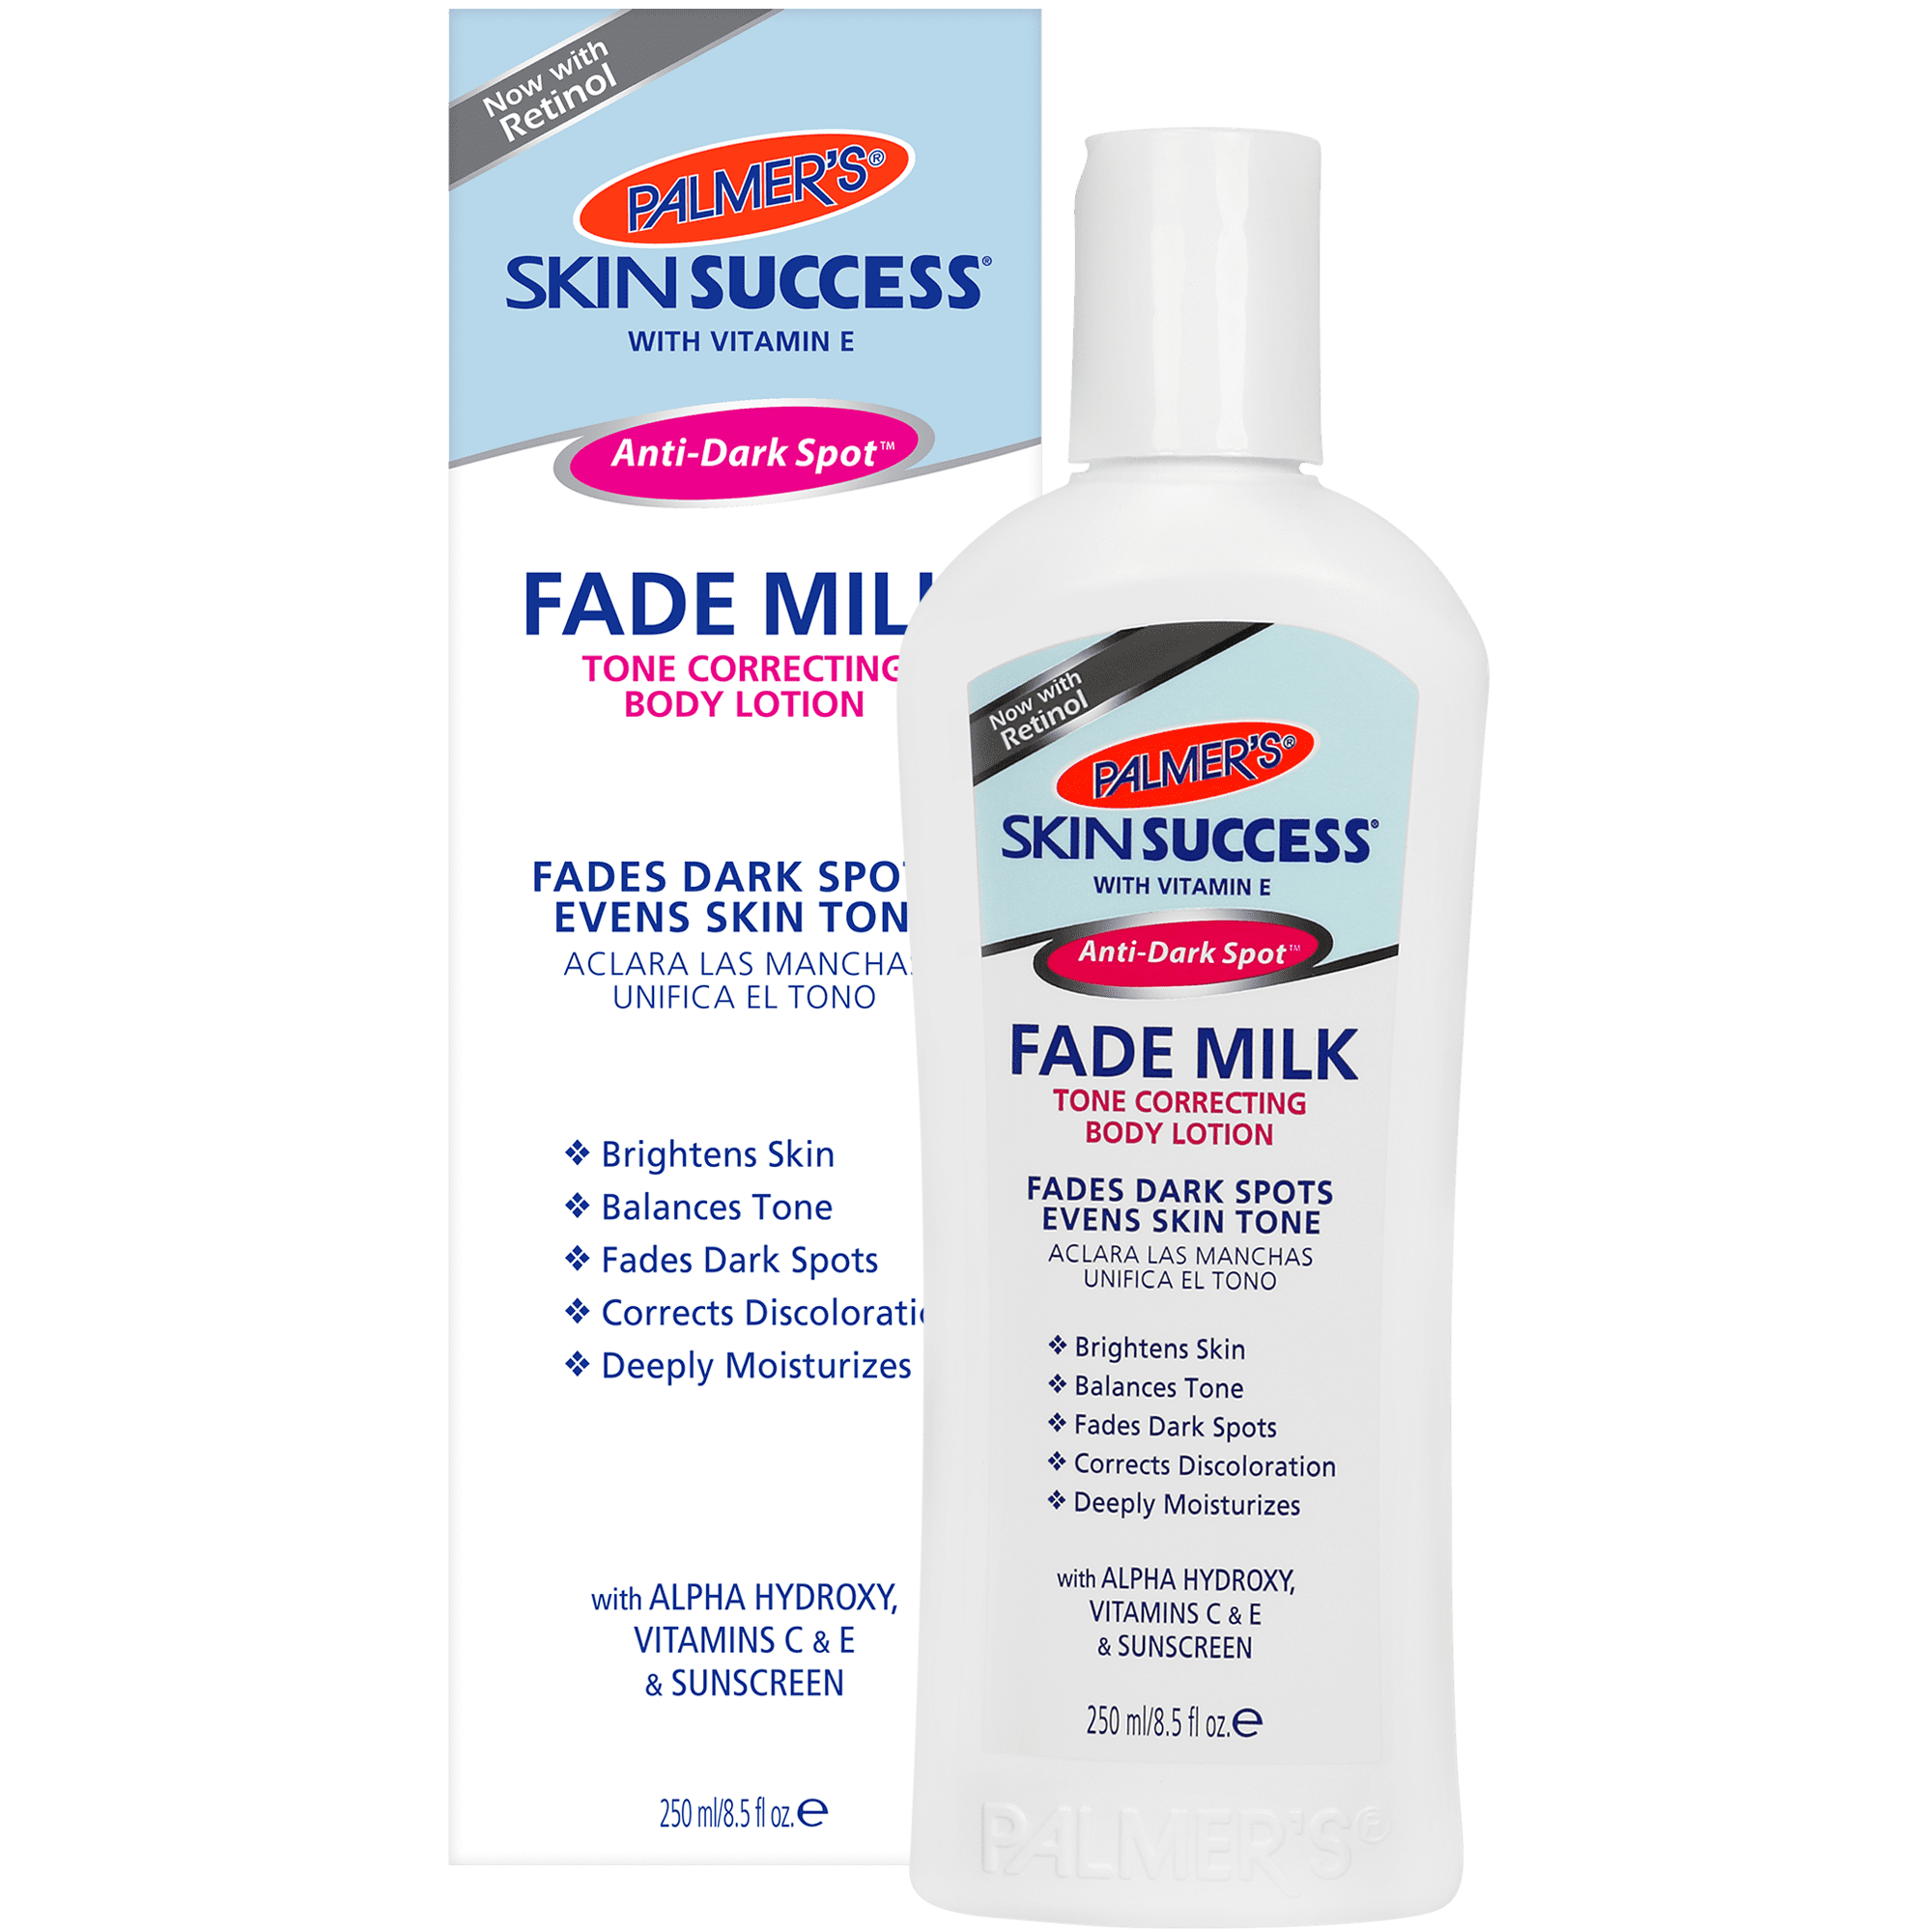 Palmer's Skin Success Anti-Dark Spot Fade Milk with Vitamin E is a dai...